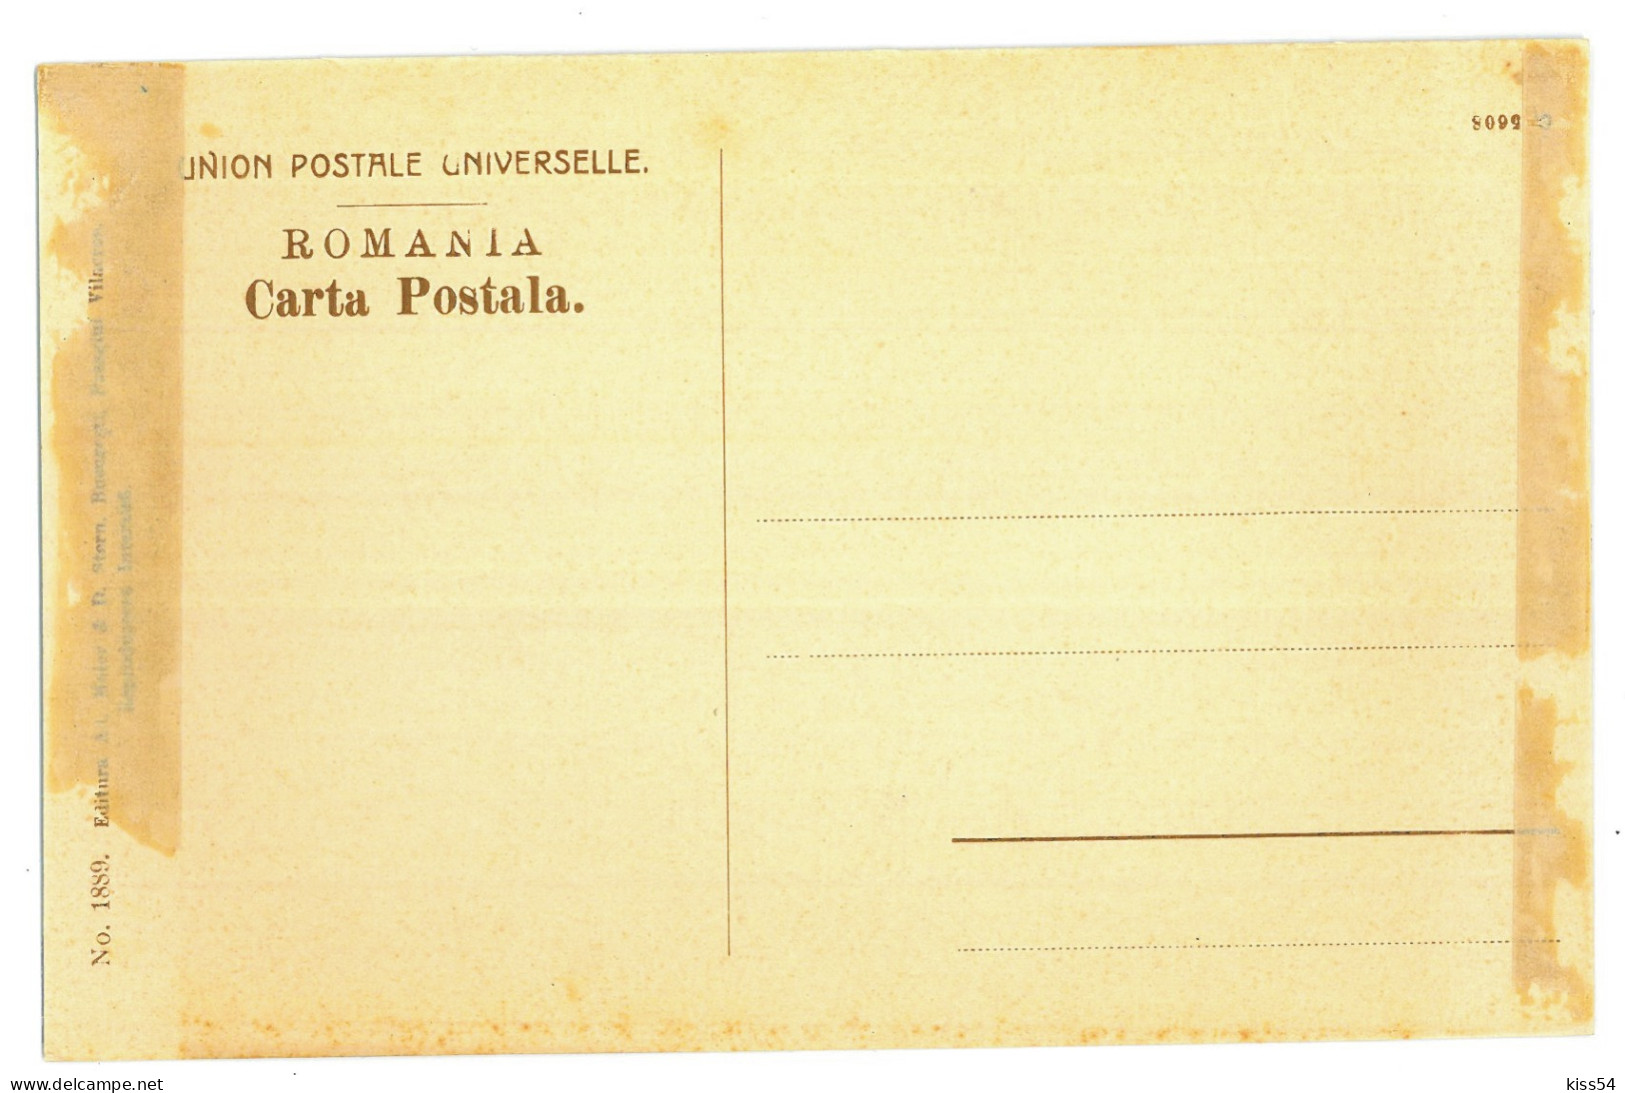 RO 79 - 22344 SINAIA, Prahova, Railway Bridge, Romania - Old Postcard - Unused - Rumänien